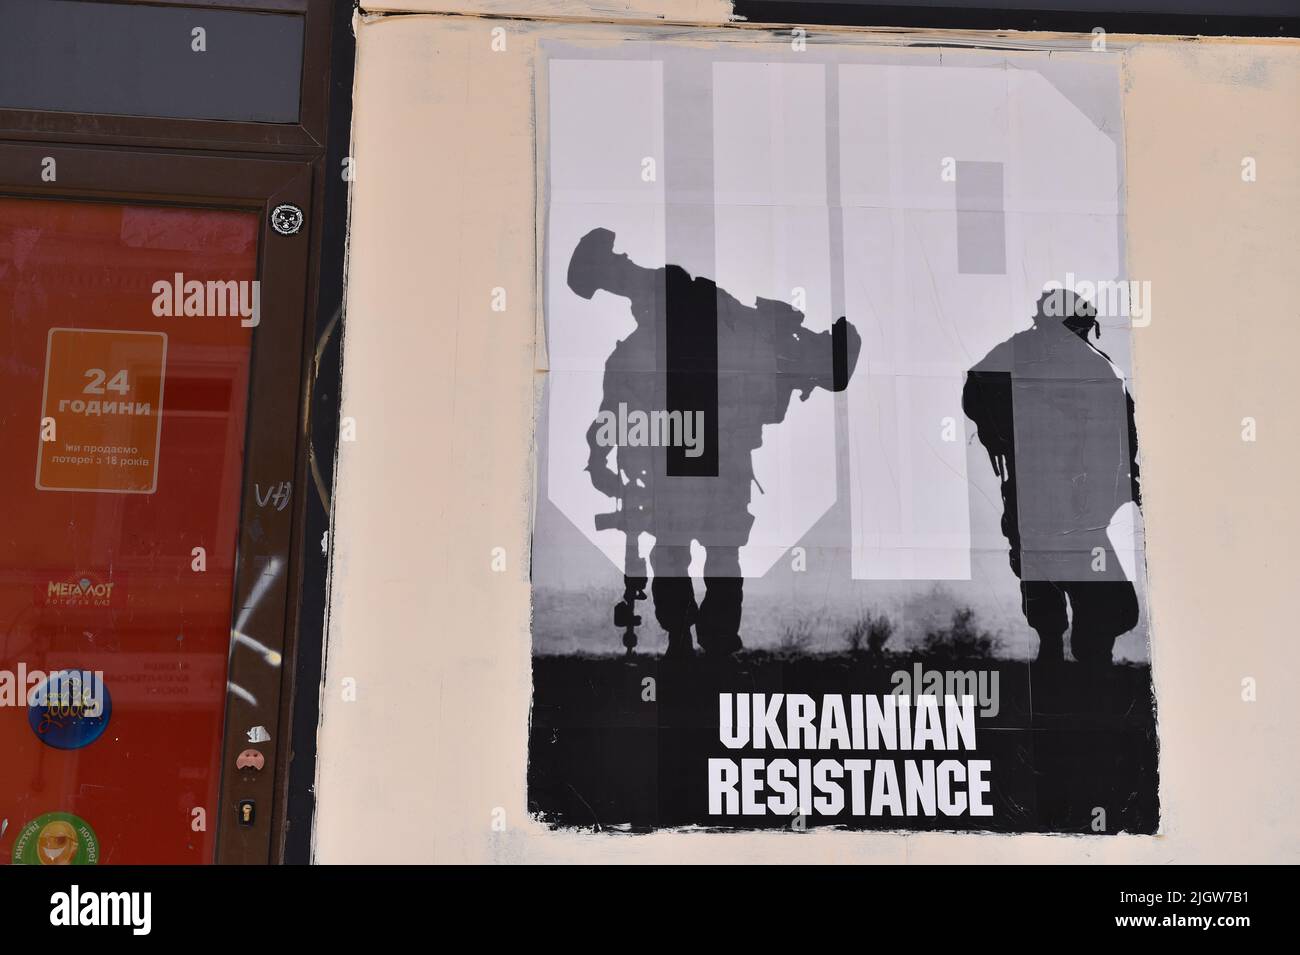 Graffiti with image of Ukrainian soldier seen on the streets of Odessa, Ukraine. Stock Photo